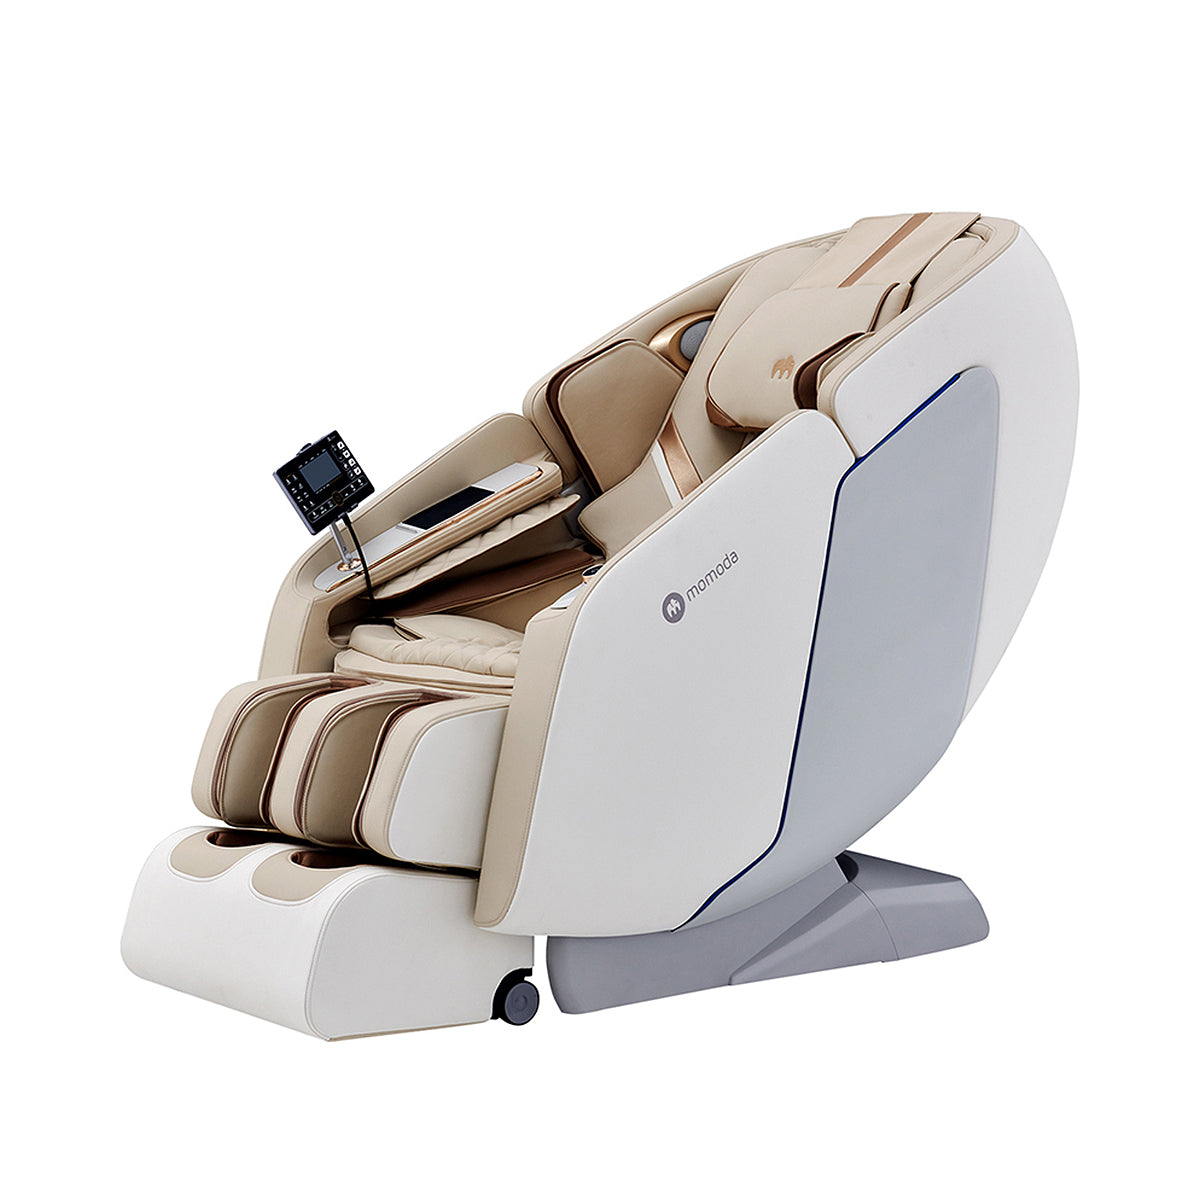 Murano AI Smart Massage Chair